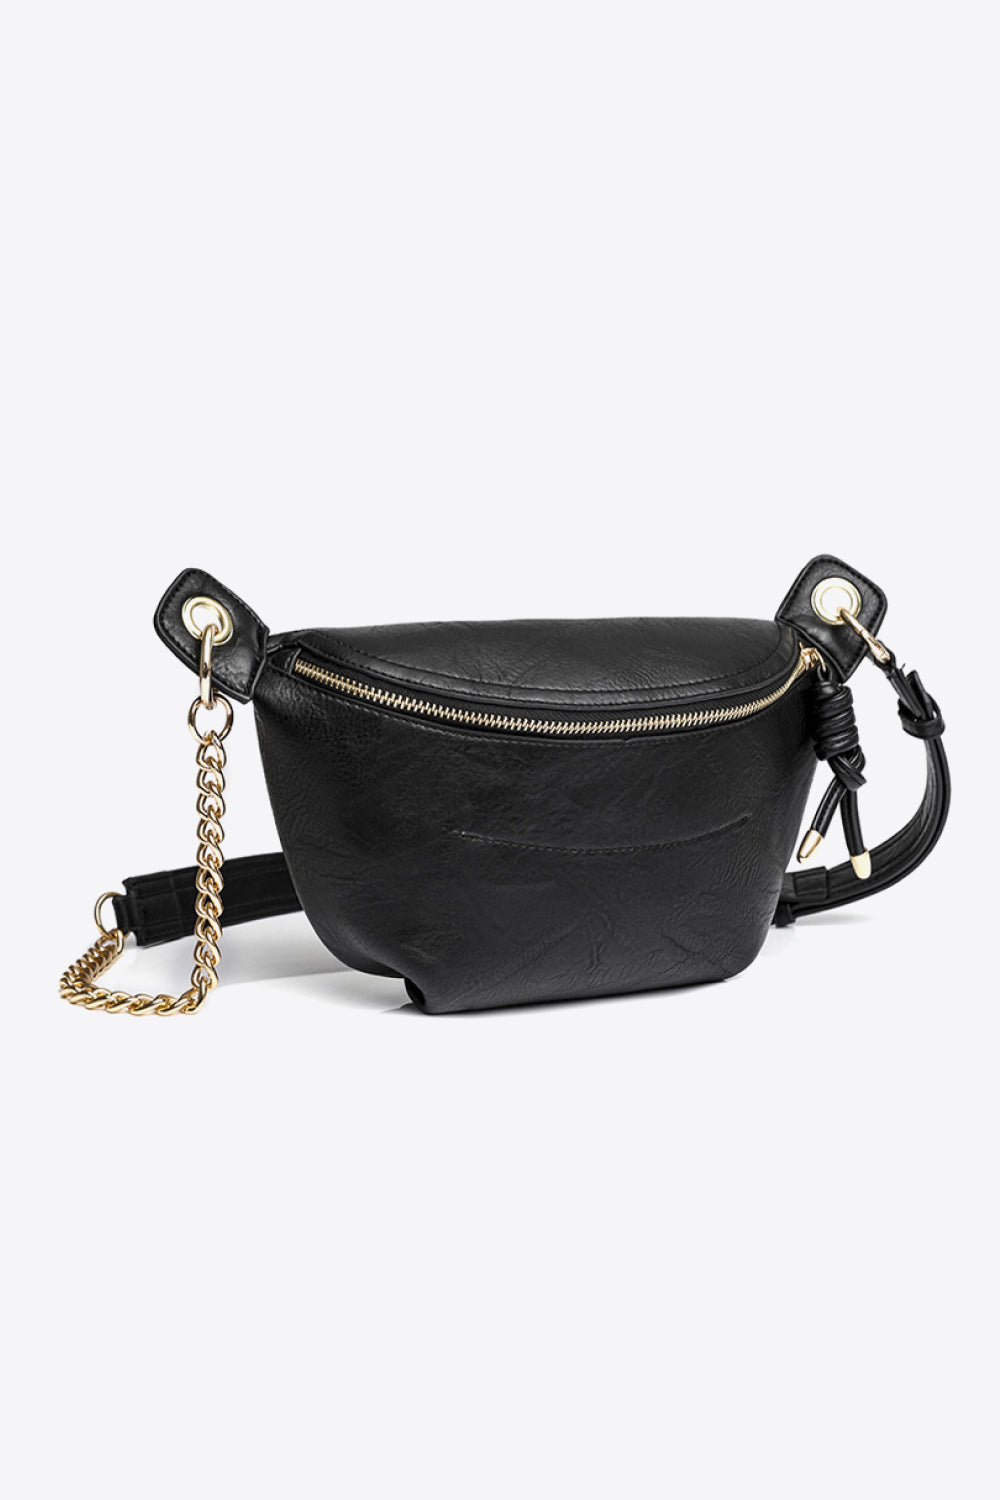 PU Leather Chain Strap Crossbody Bag - nailedmoms